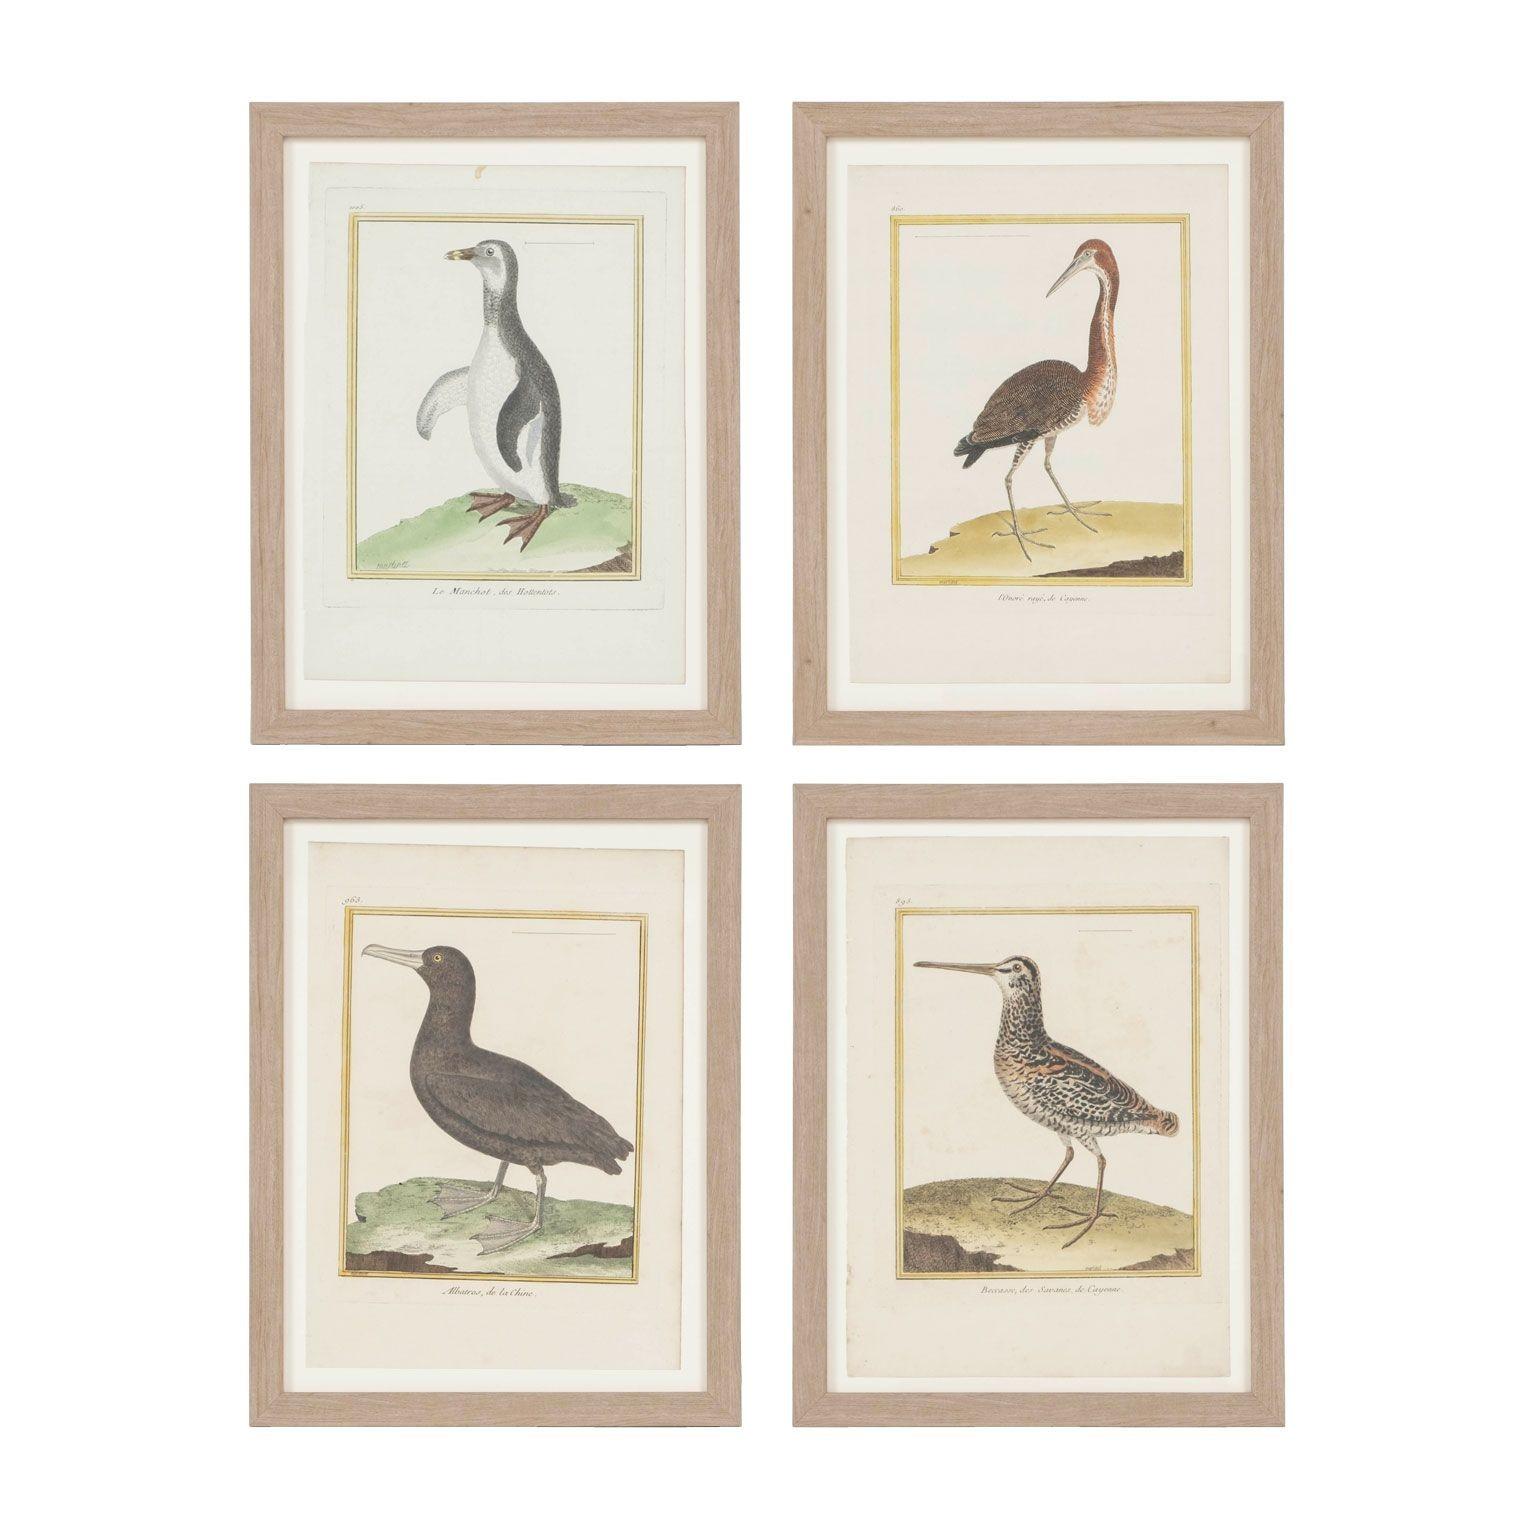 Twenty Hand-Colored Bird Engravings by François Nicolas Martinet 1